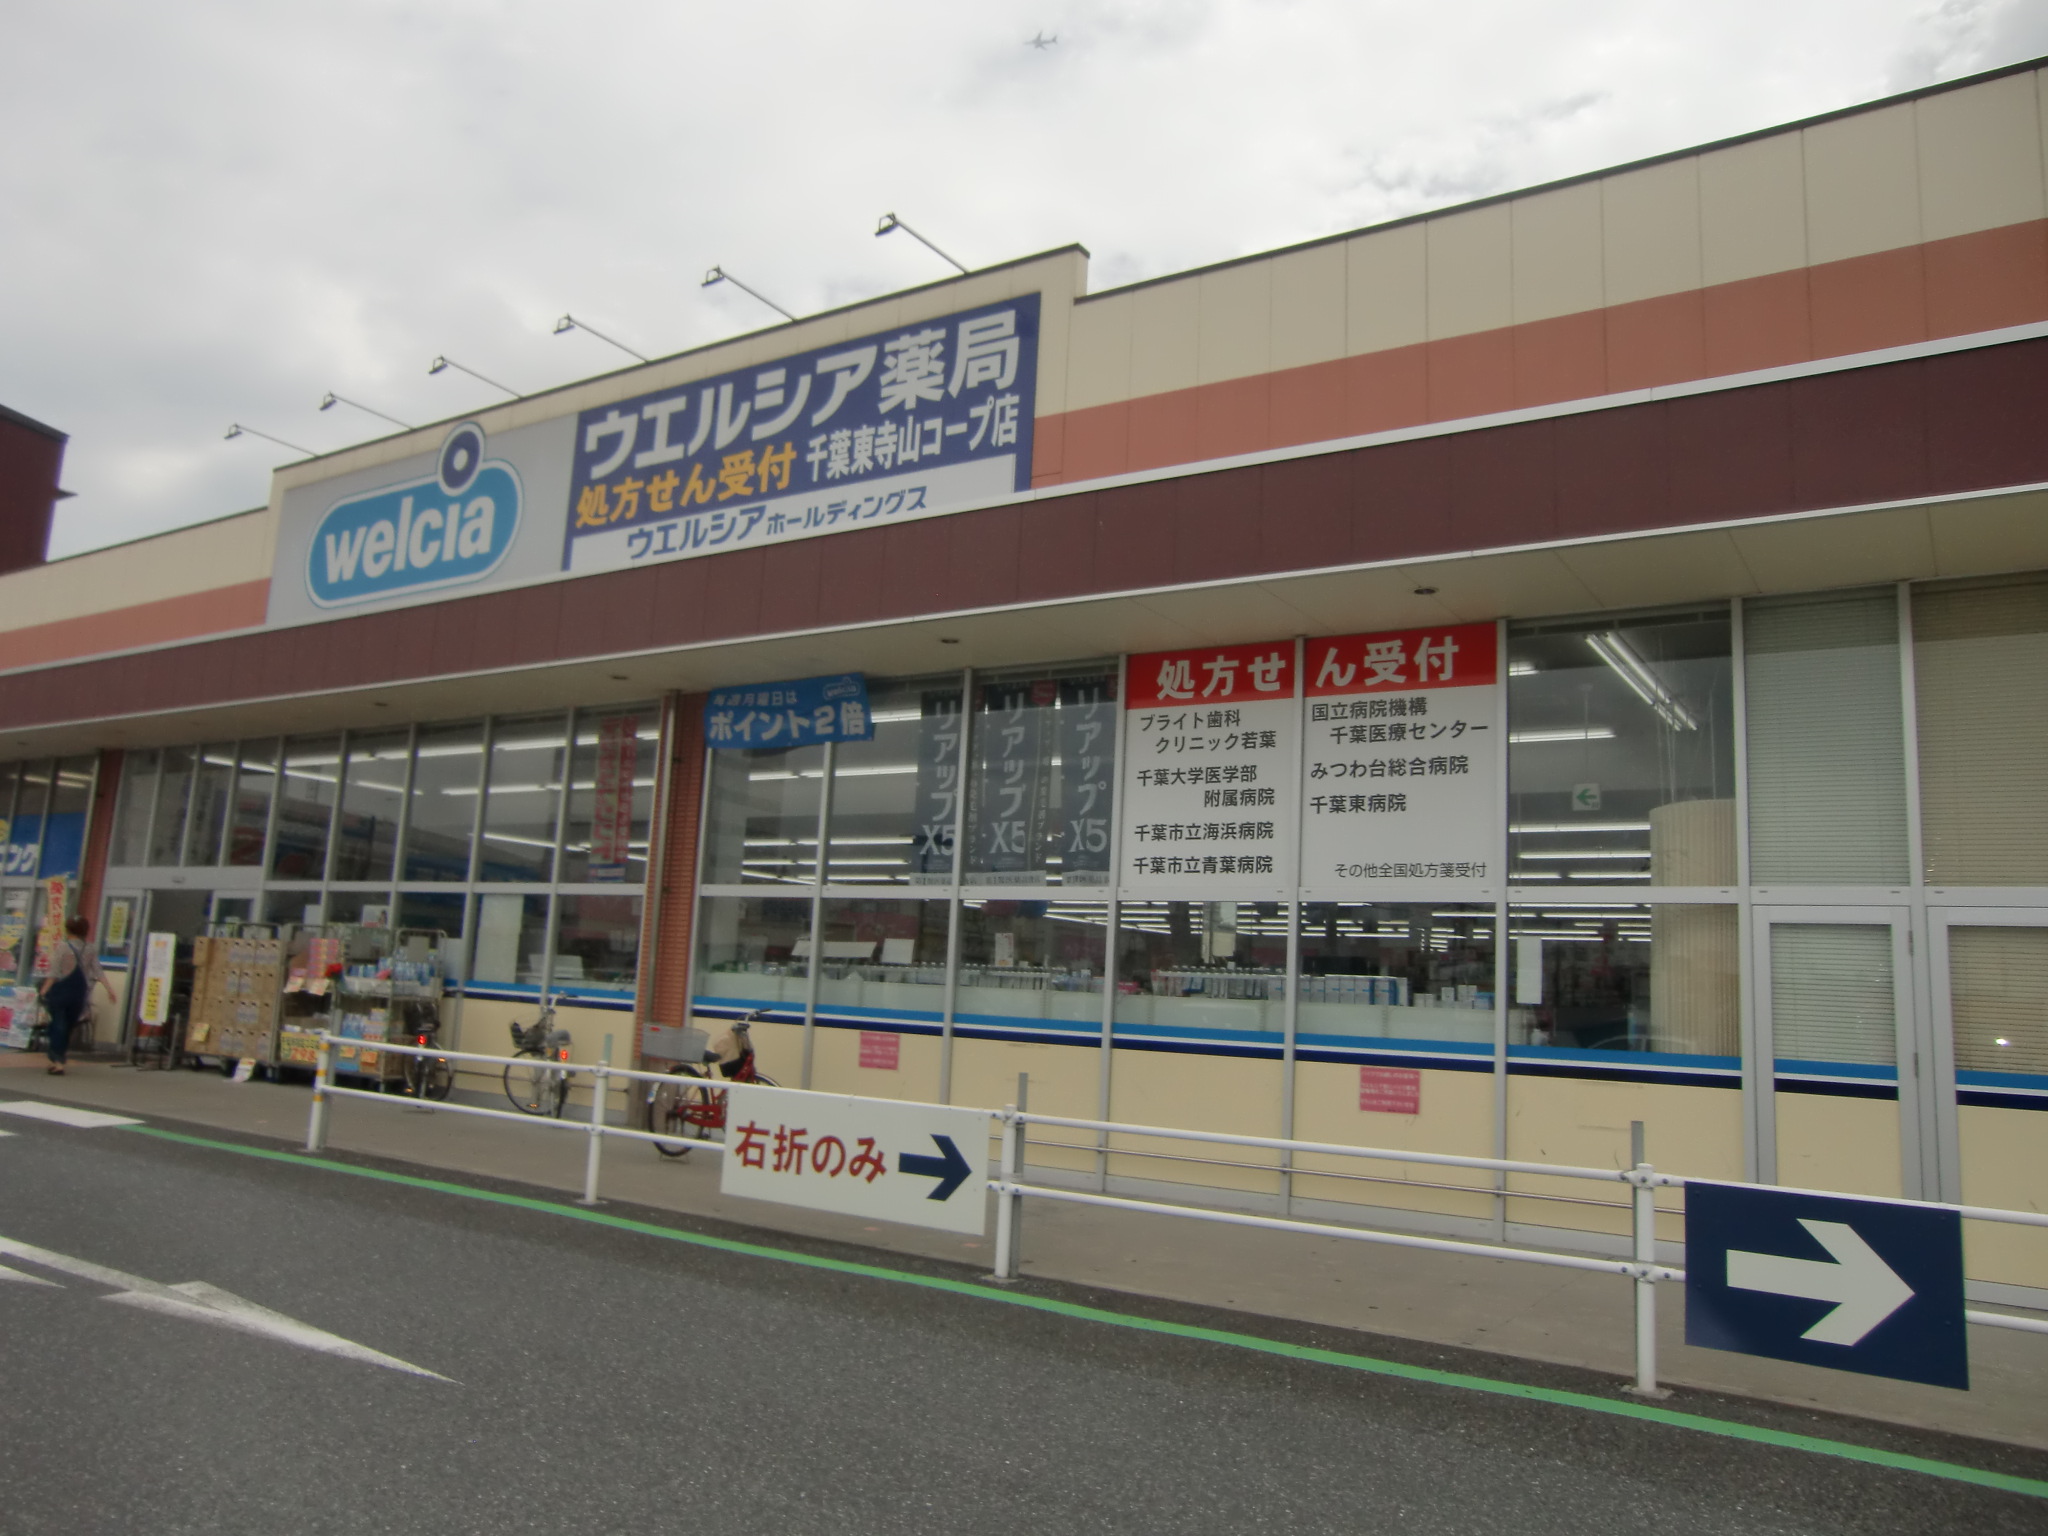 Dorakkusutoa. Uerushia Chiba Higashiterayama Coop store 1010m until (drugstore)